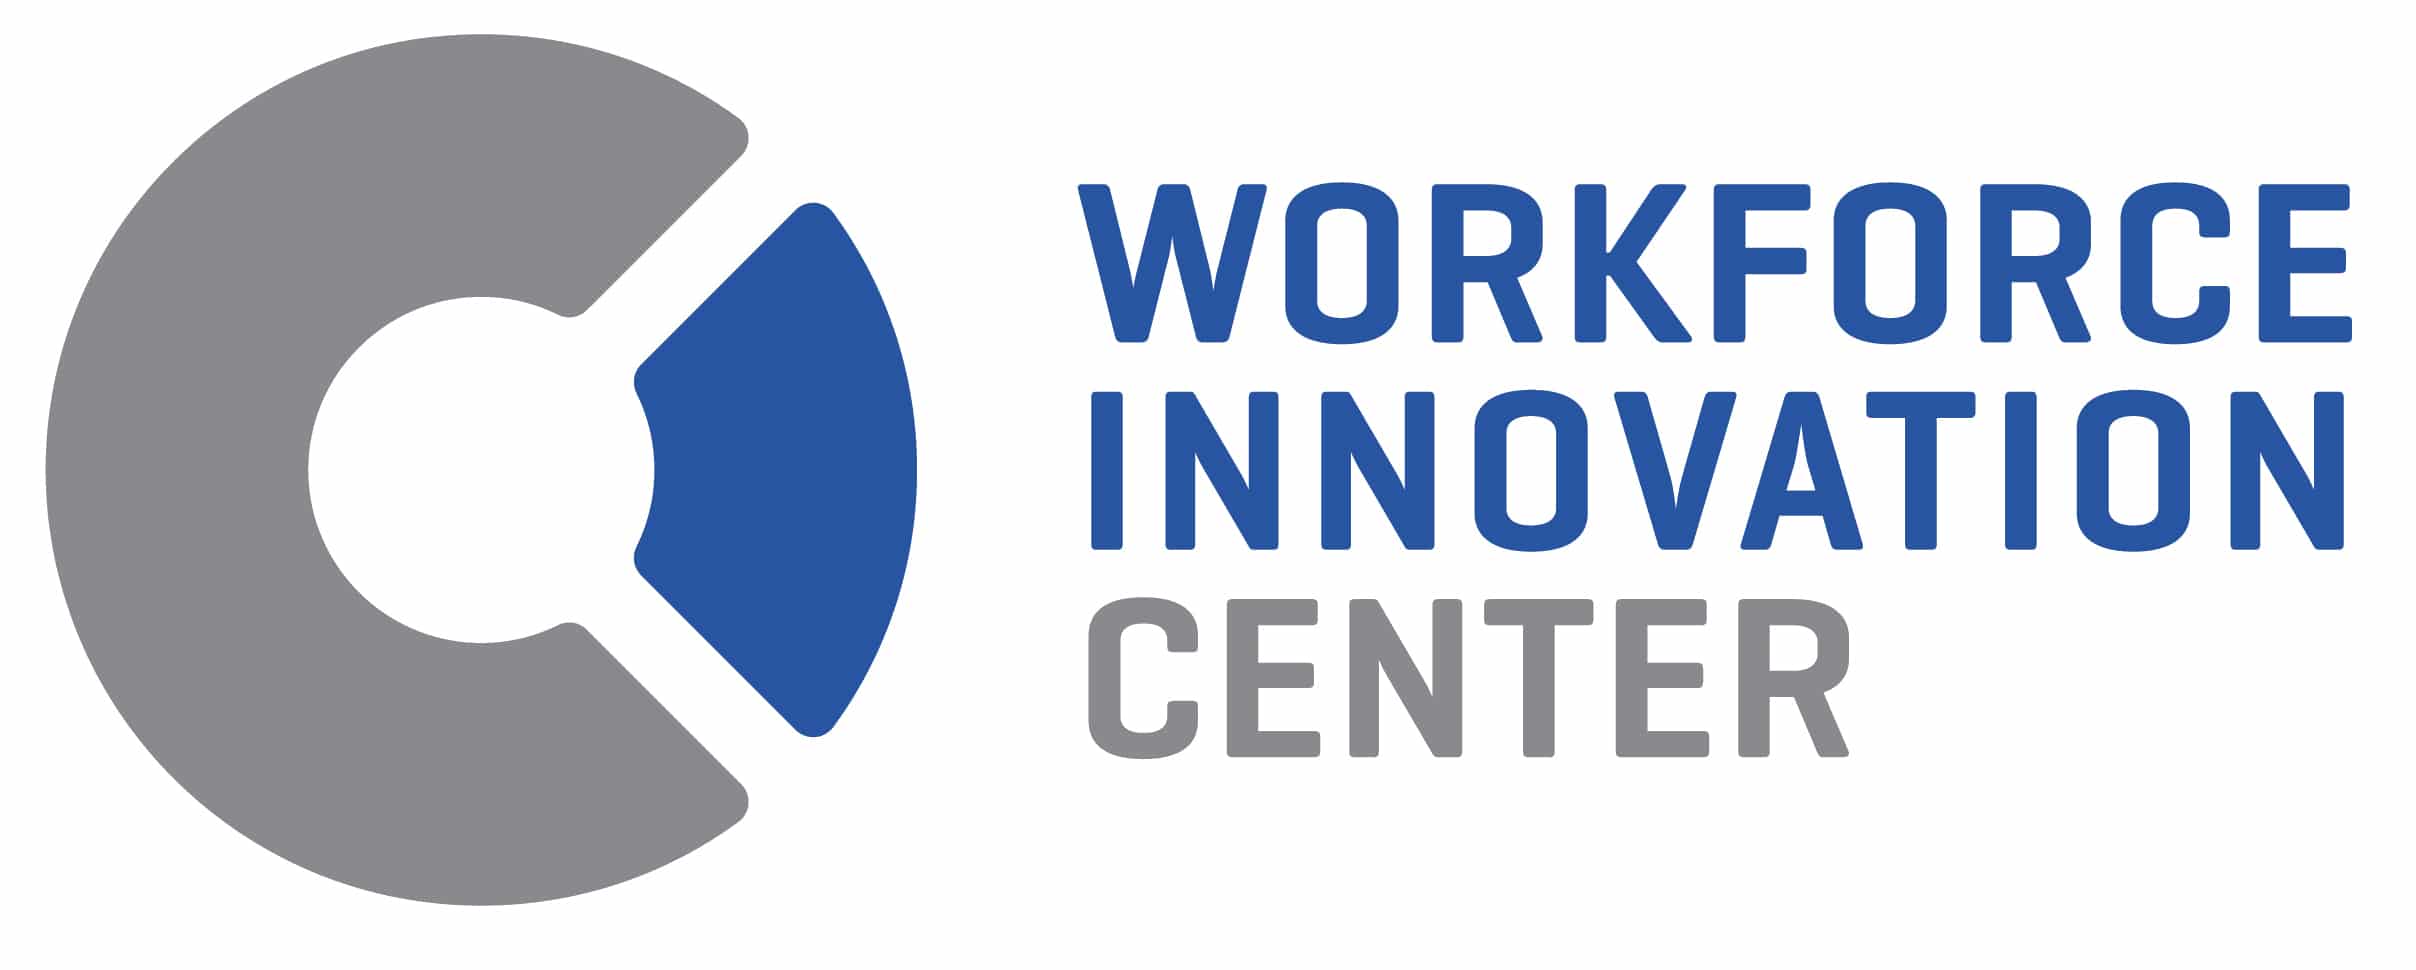 Workforce Innovation Center Logo